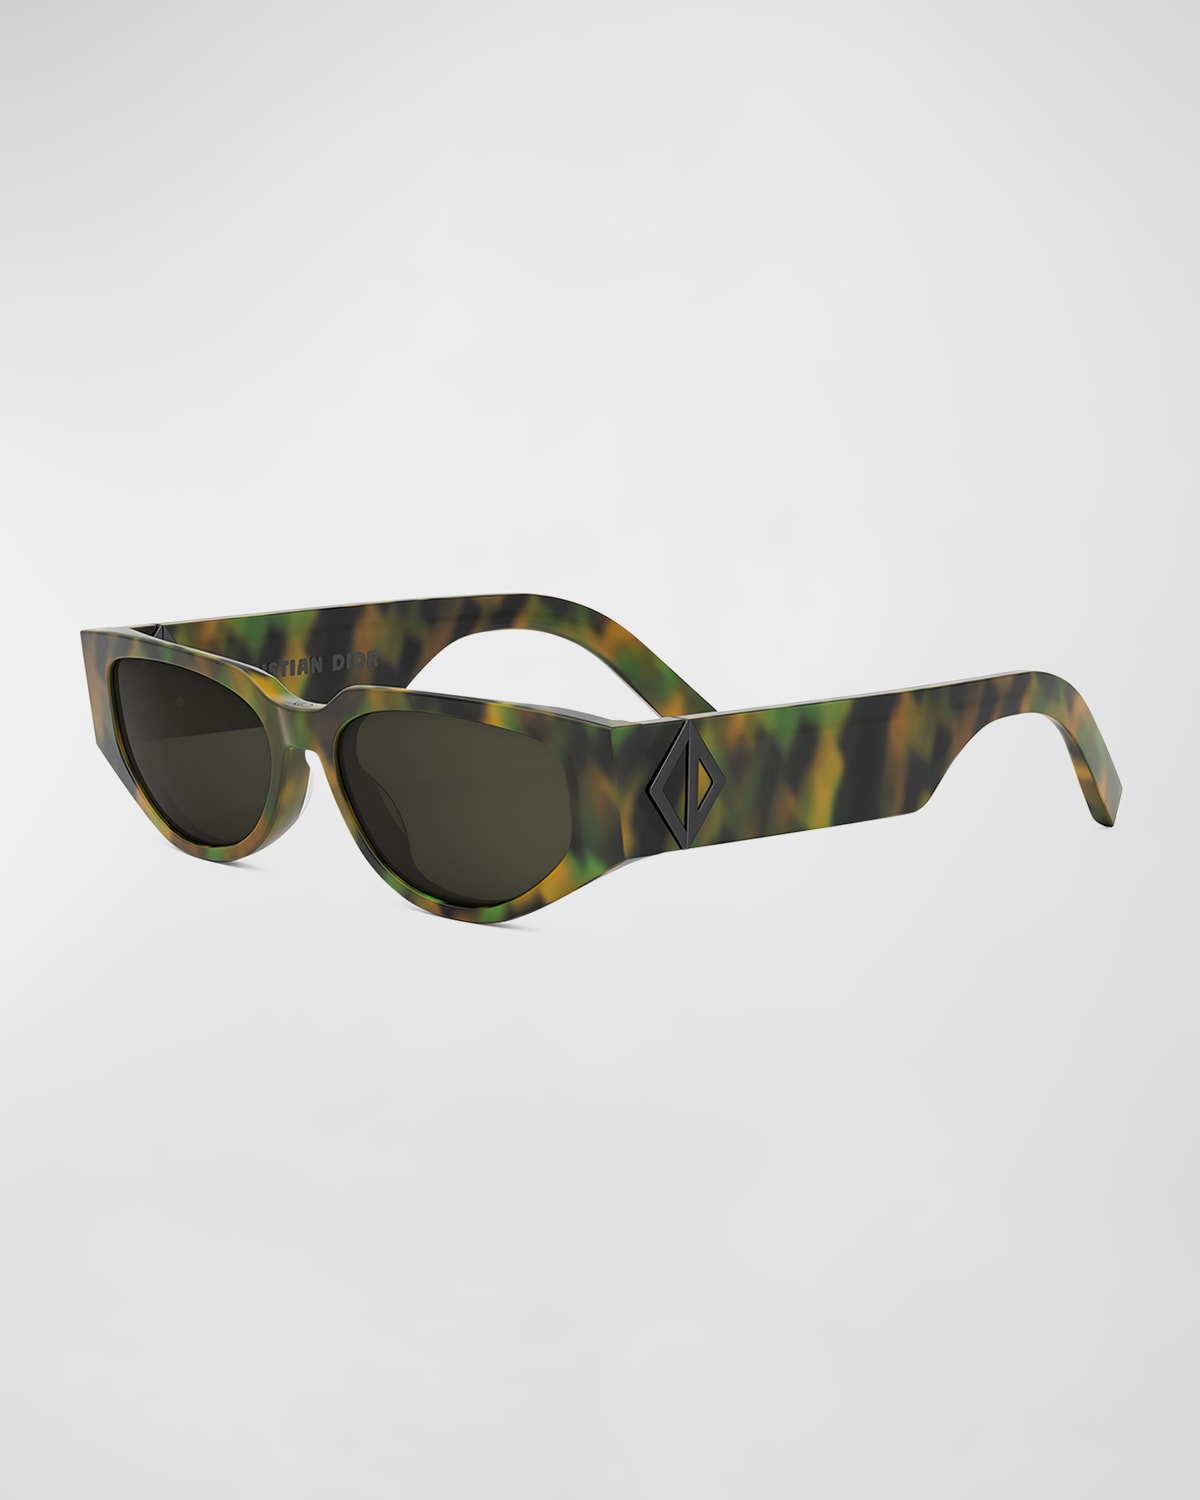 Men's CD Diamond S71 Sunglasses